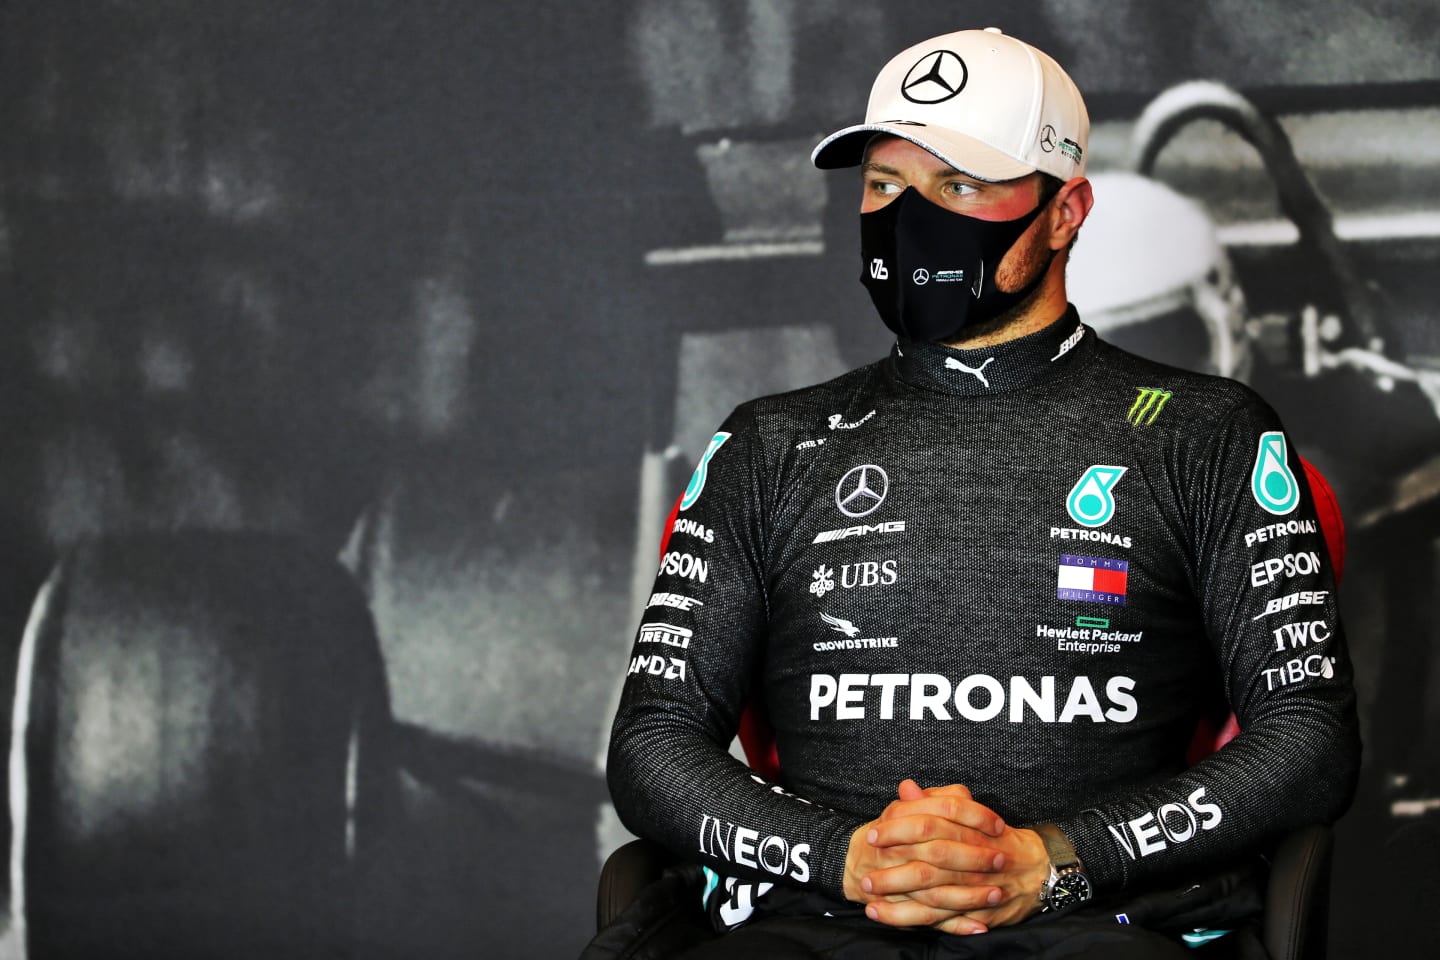 IMOLA, ITALY - OCTOBER 31: Pole position qualifier Valtteri Bottas of Finland and Mercedes GP talks